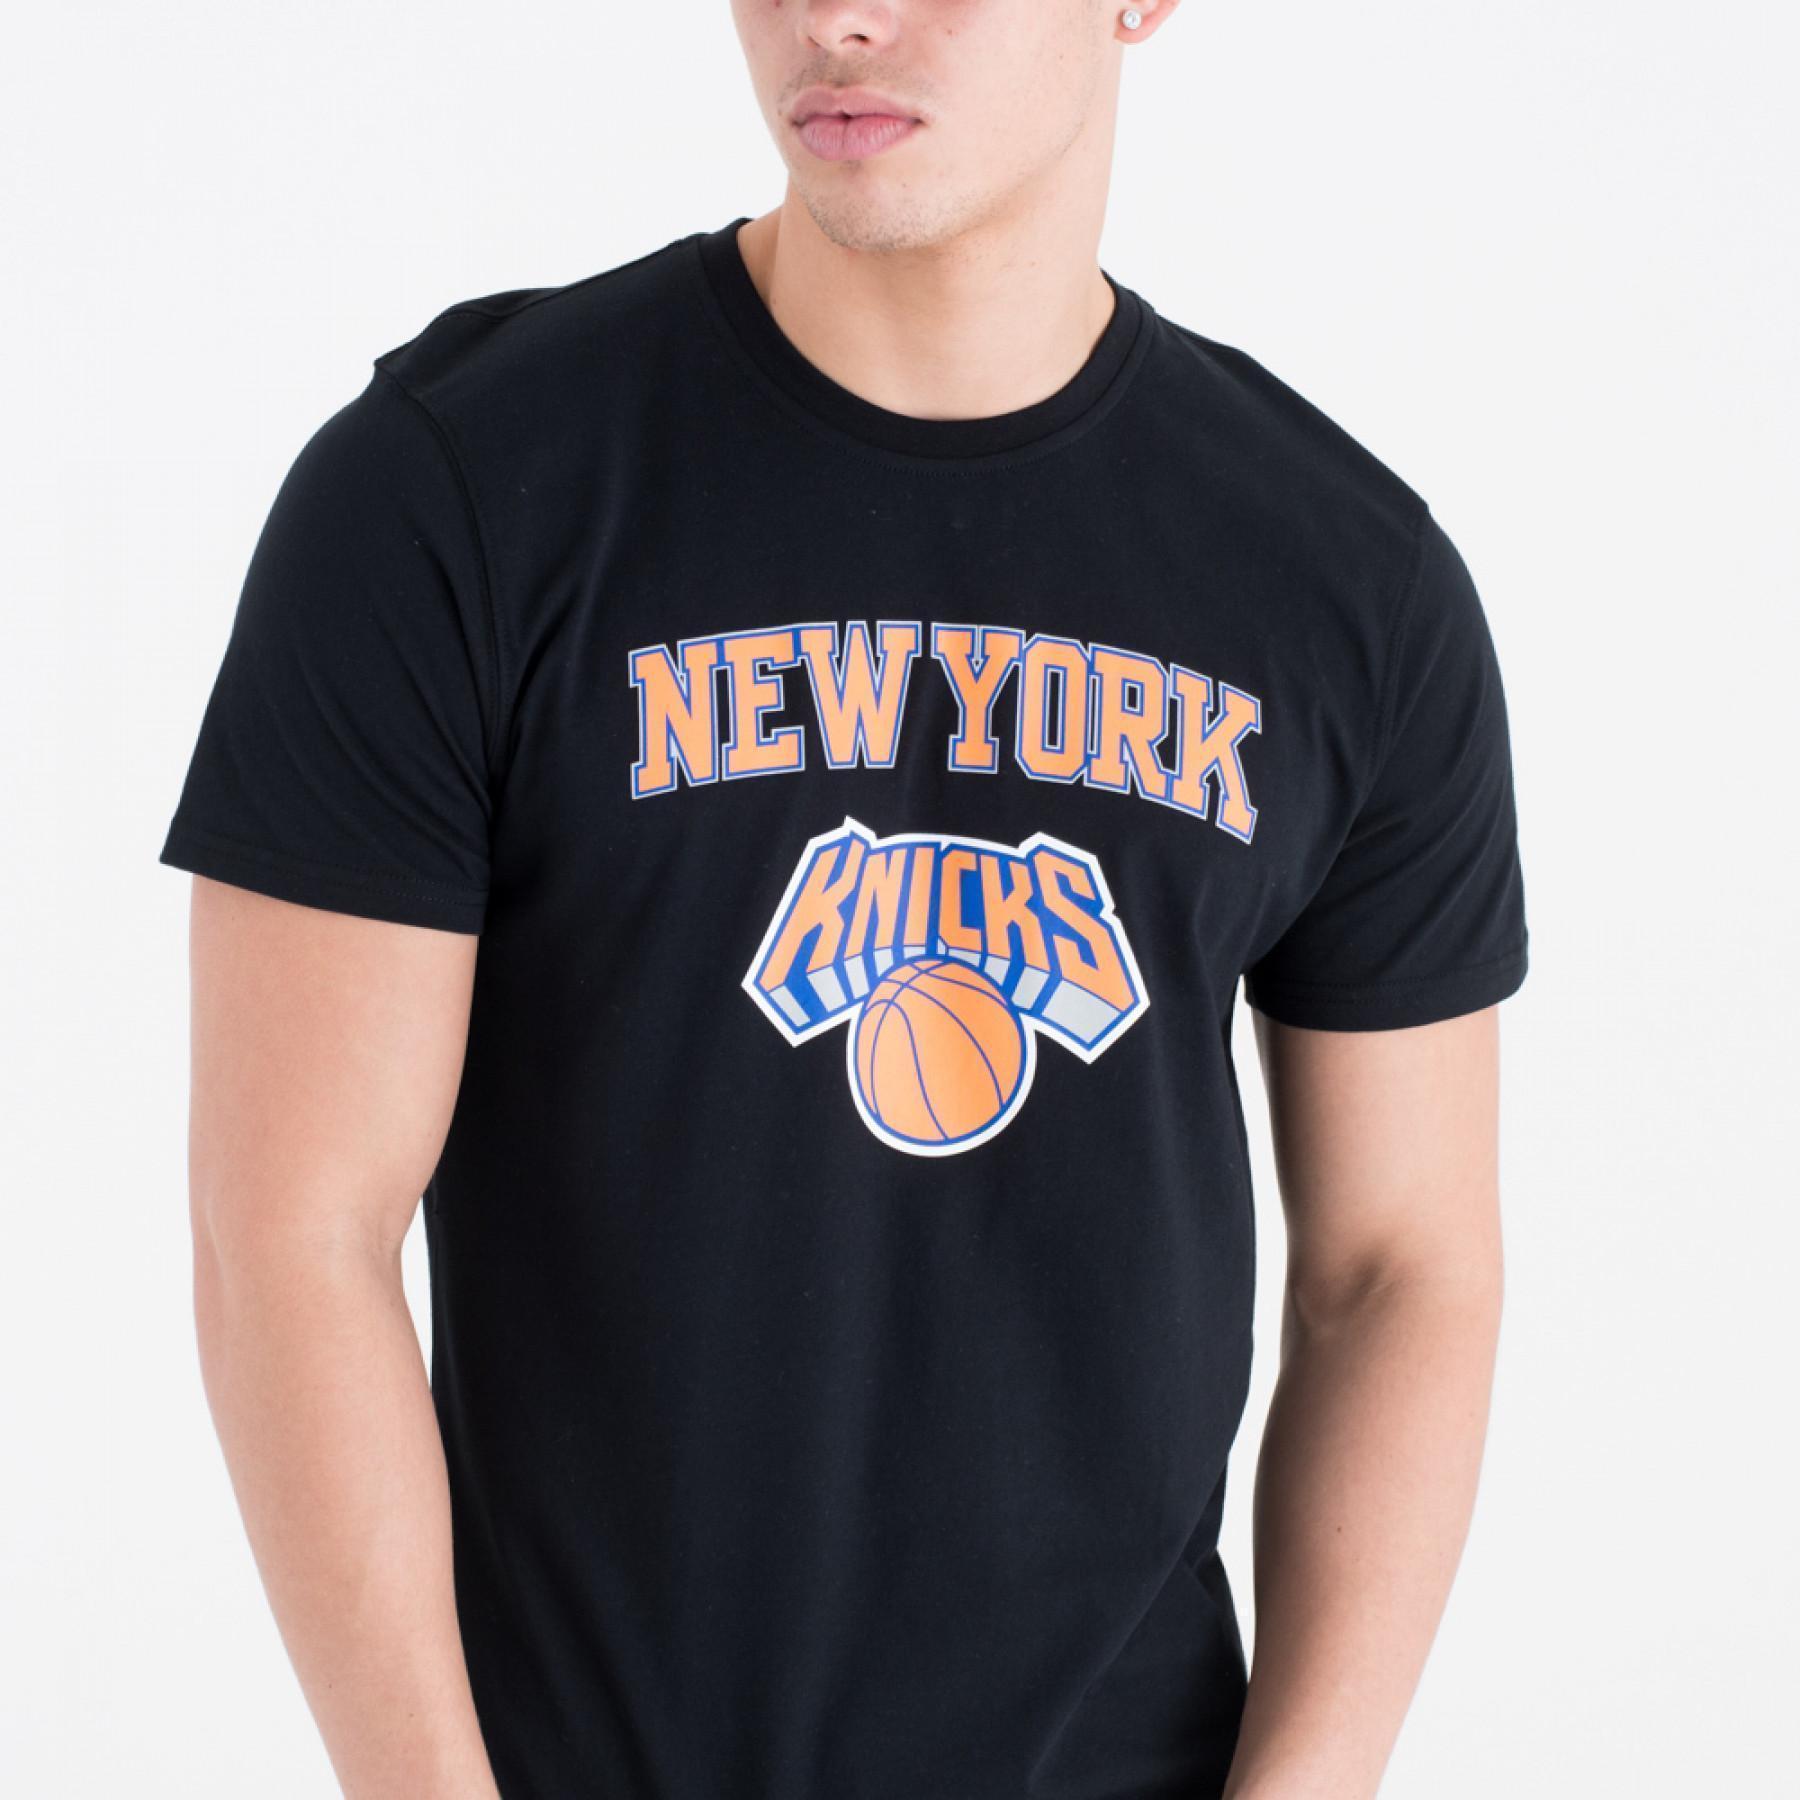  New EraT - s h i r t   logo New York Knicks